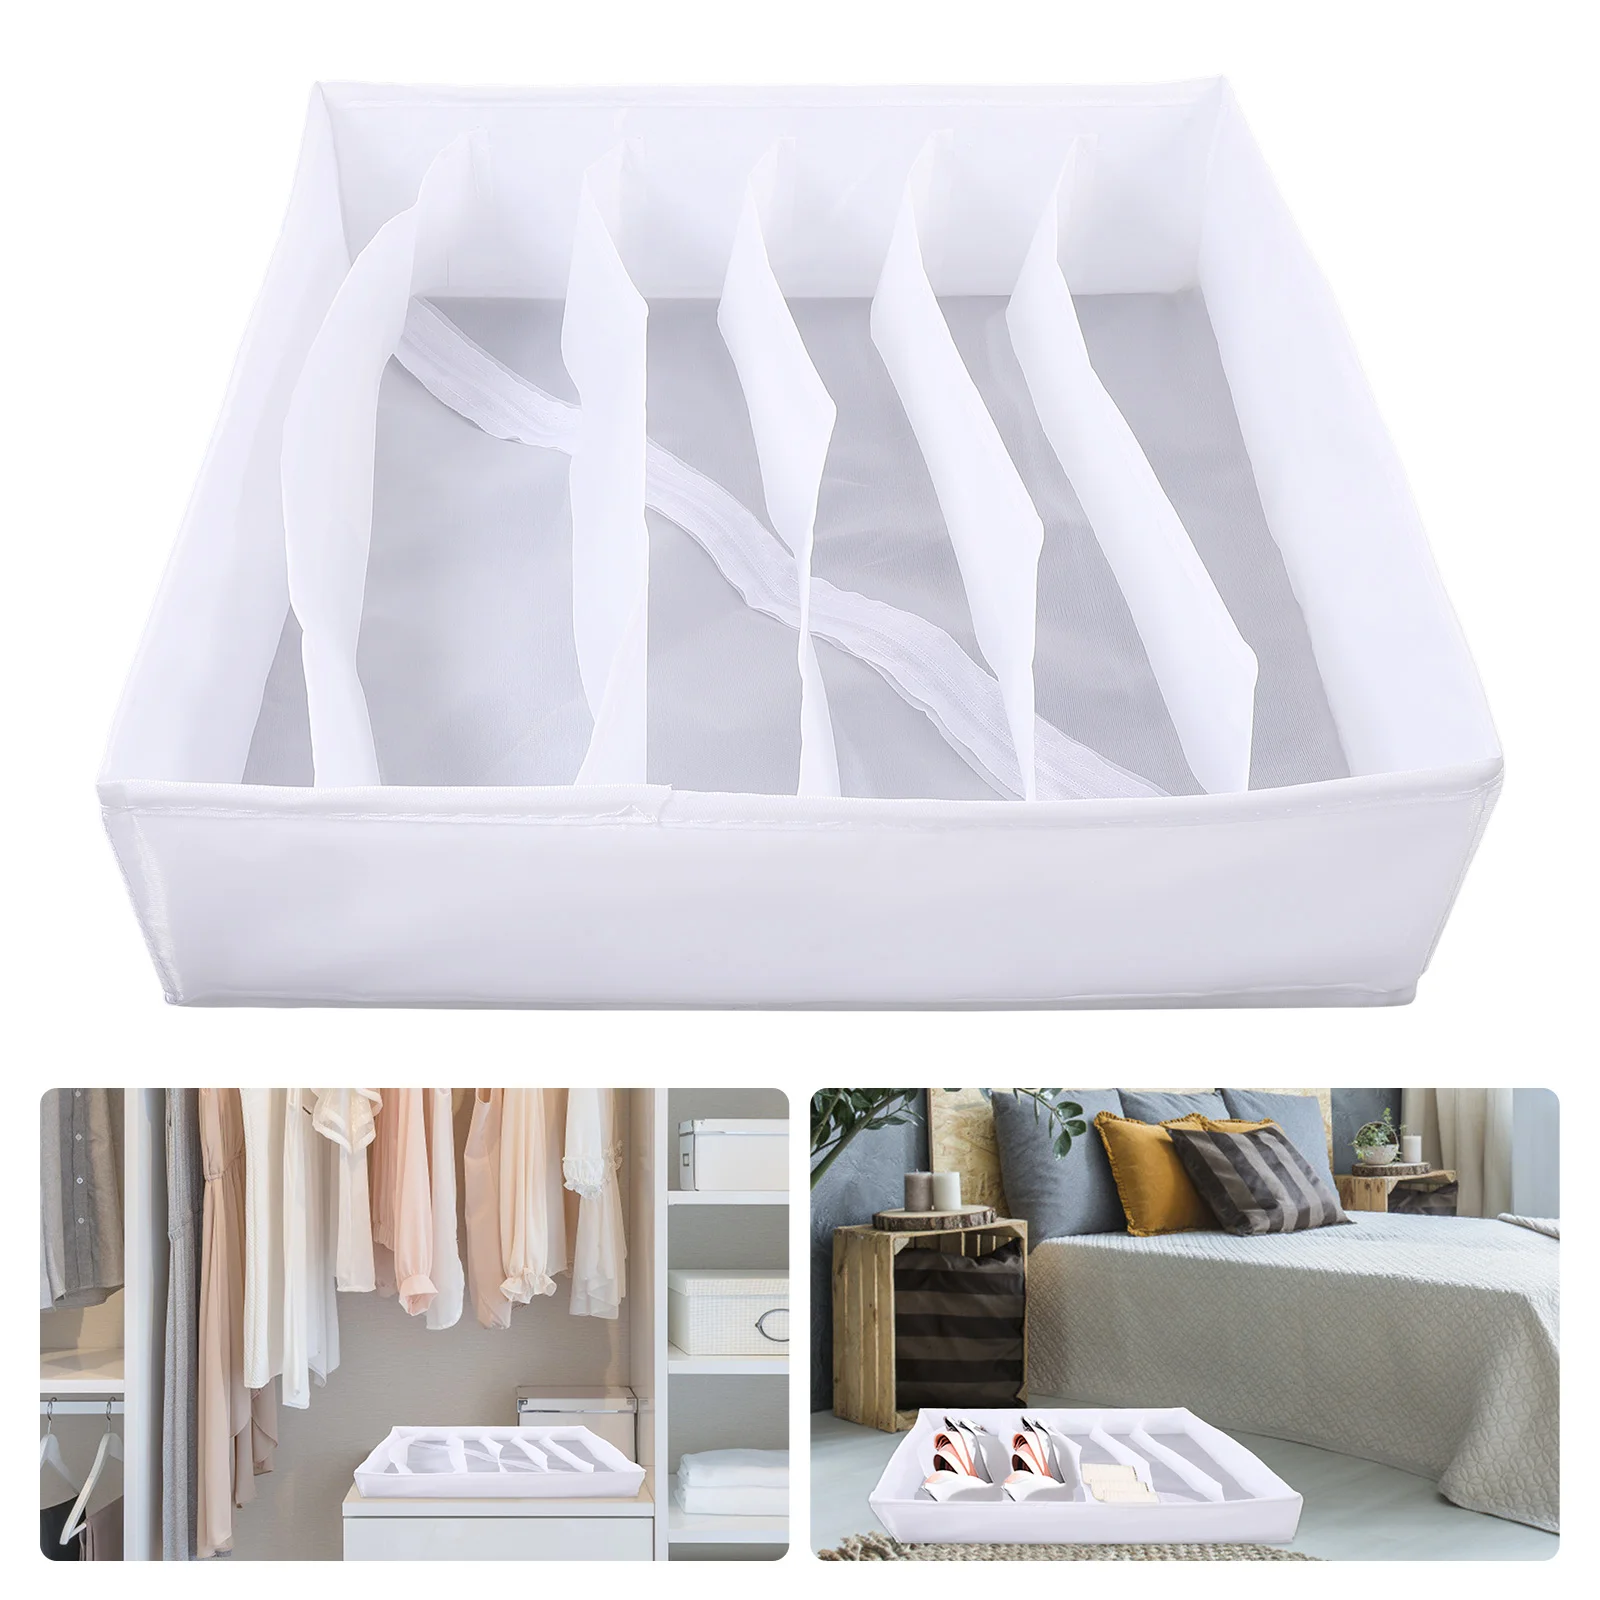 

Organizer Storage Box Drawer Undergarment Book Baskets Toy Hamper Laundry Folding Legging Basket Separators Sundries Fabric